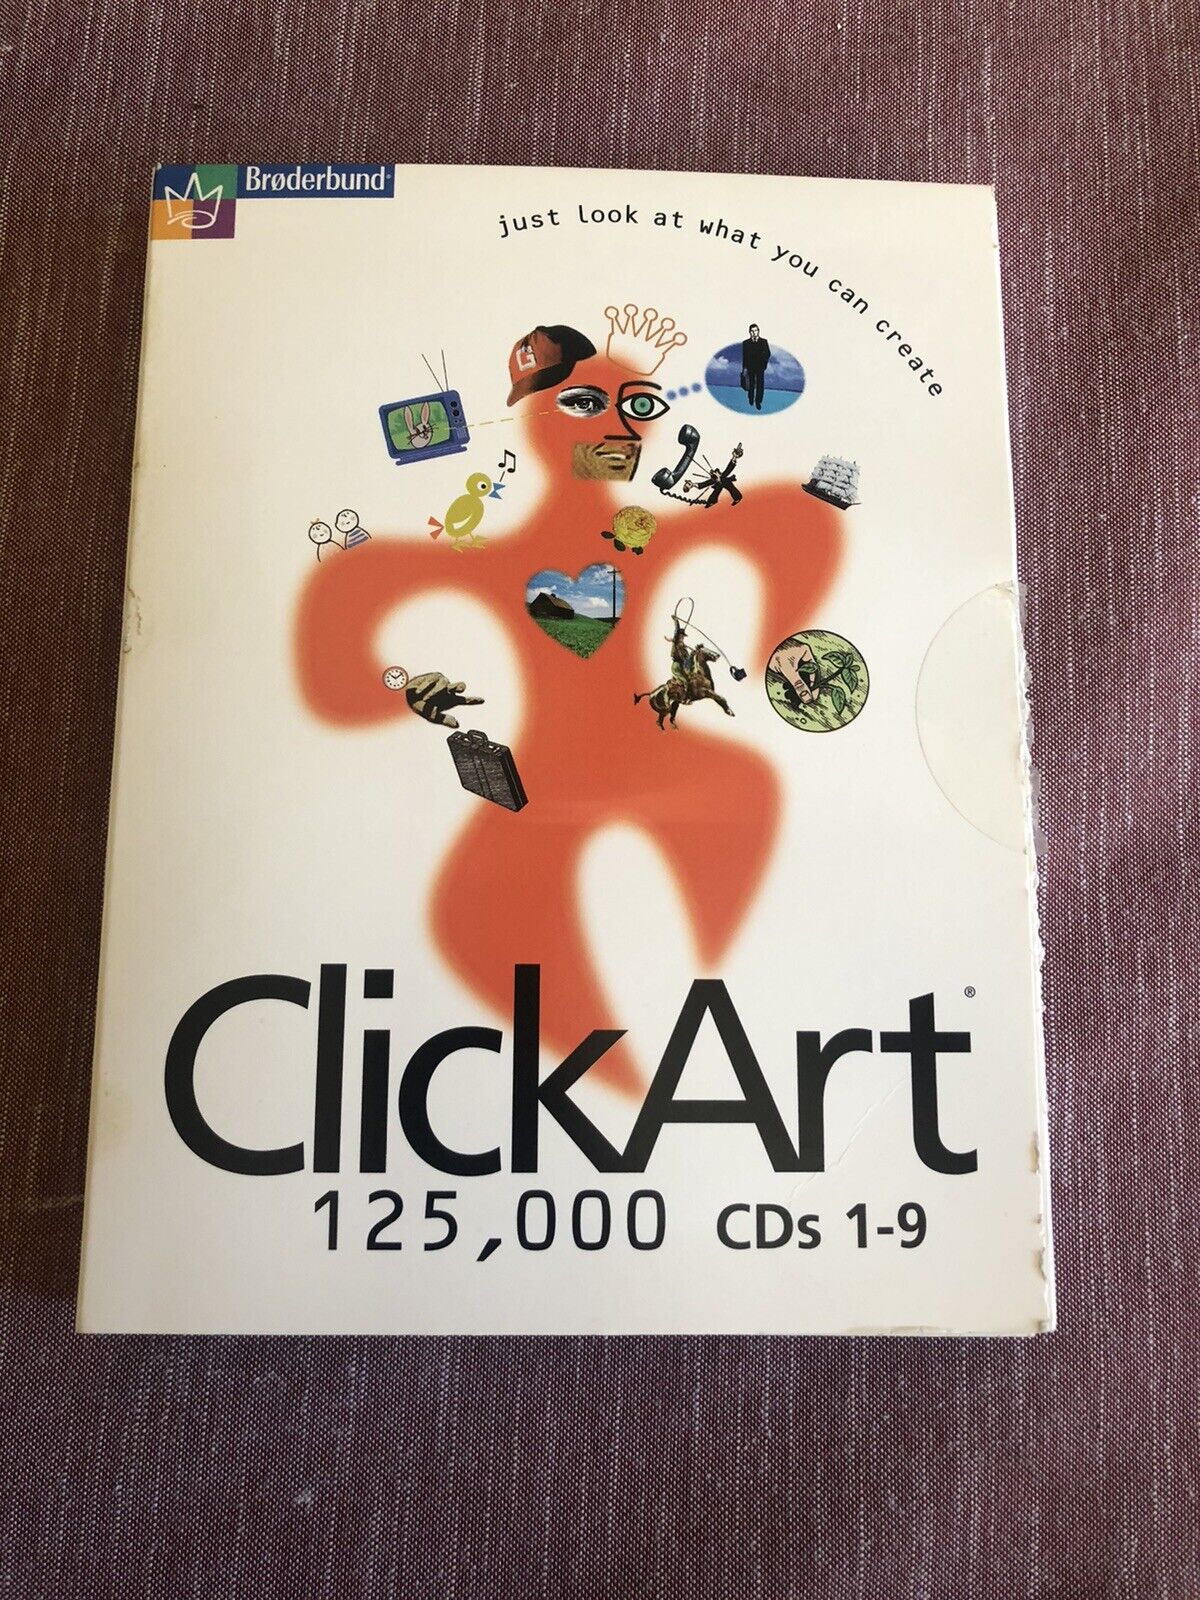 ClickArt Broderbund 125,000 CDs 1-9 Software Images Windows